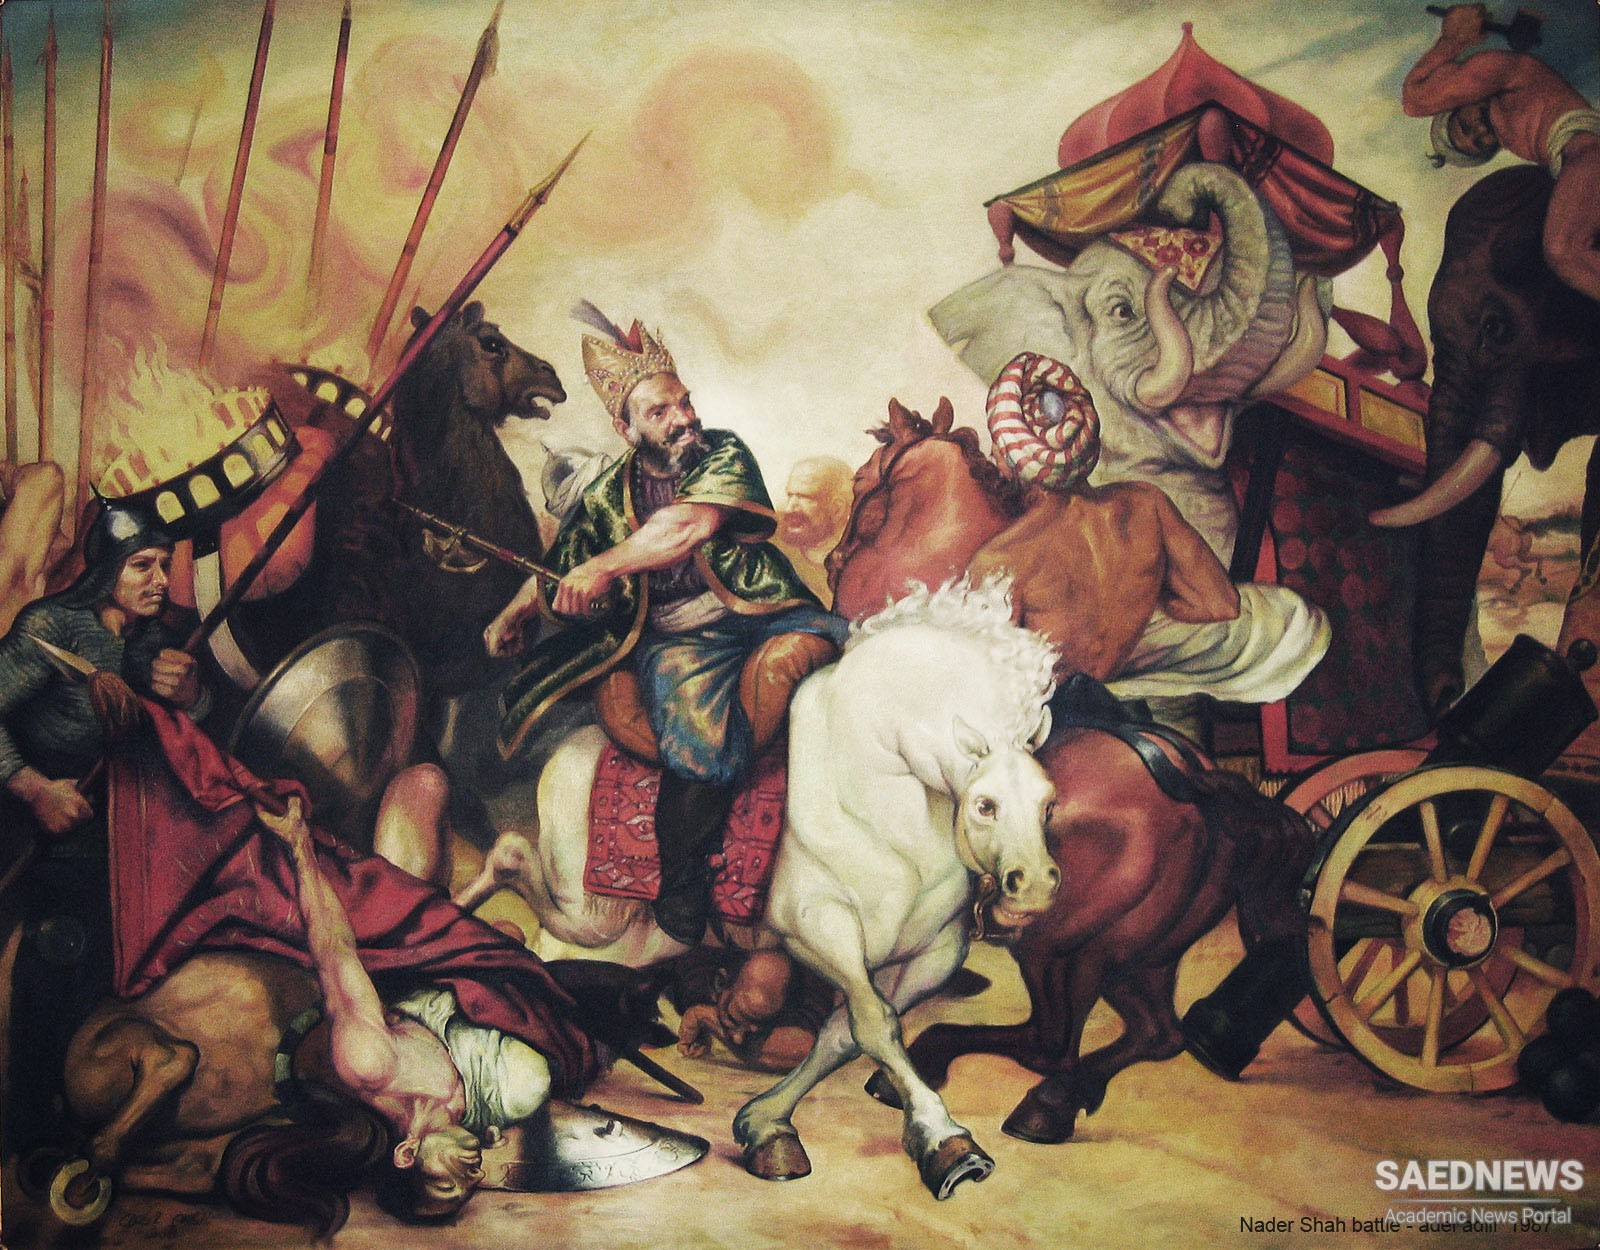 Nadir Shah's Foreign Policy towards the Ottoman Intruders